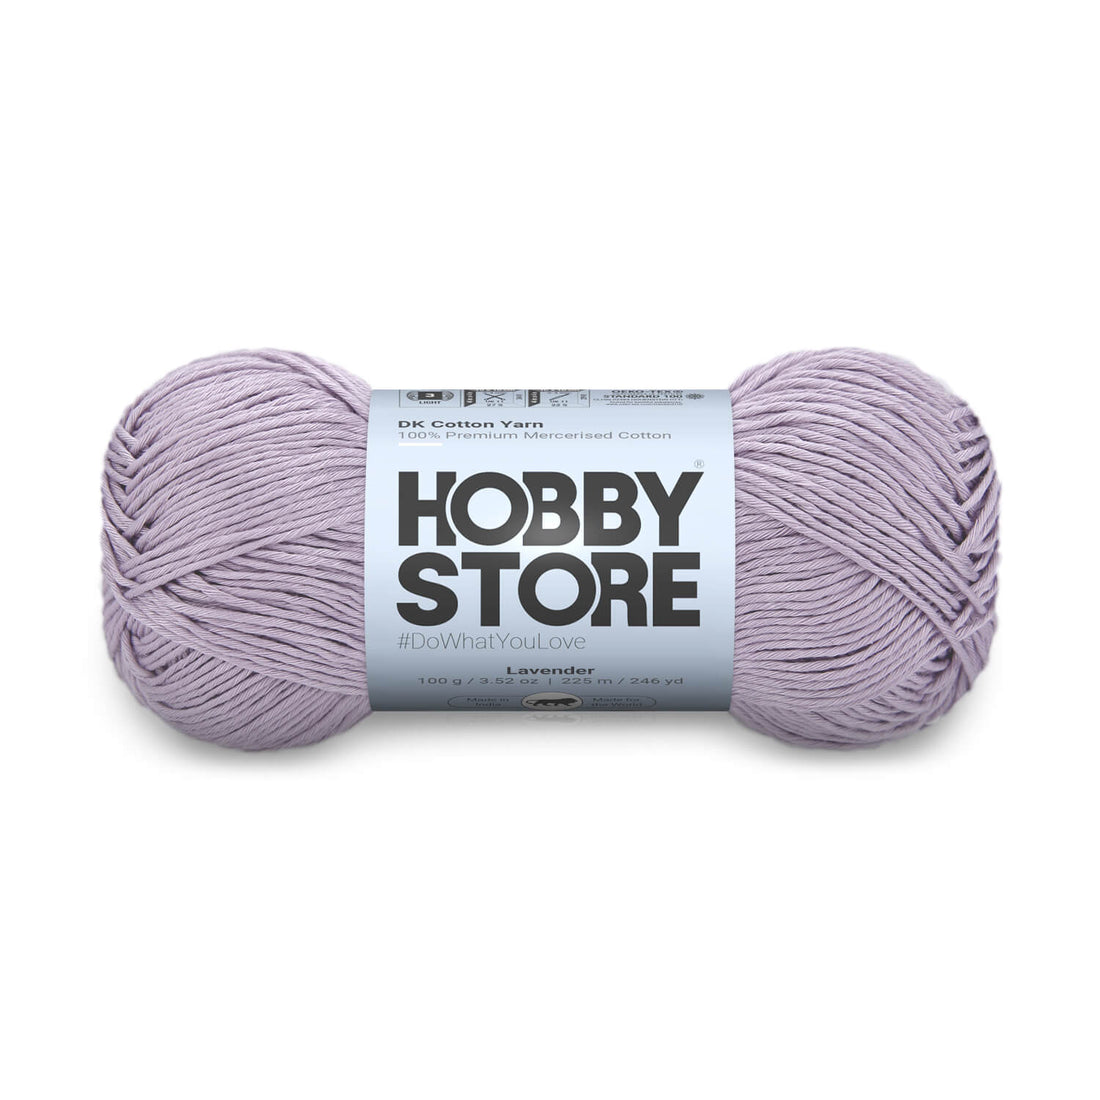 DK Mercerised Cotton Yarn by Hobby Store - Lavender - 322